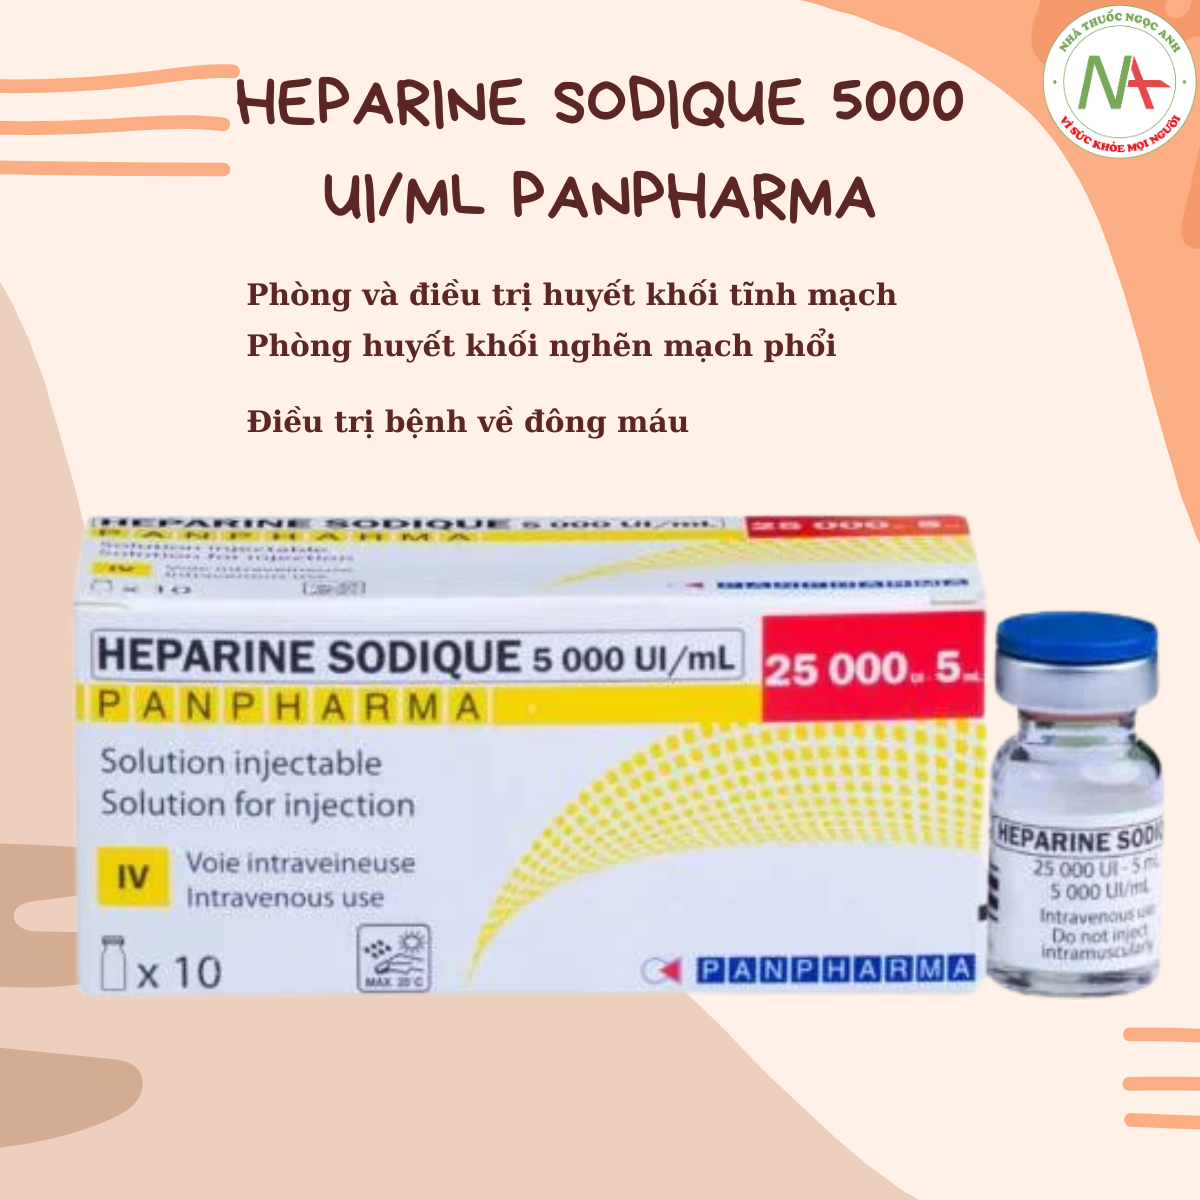 Heparine Sodique 5000 UIml Panpharma